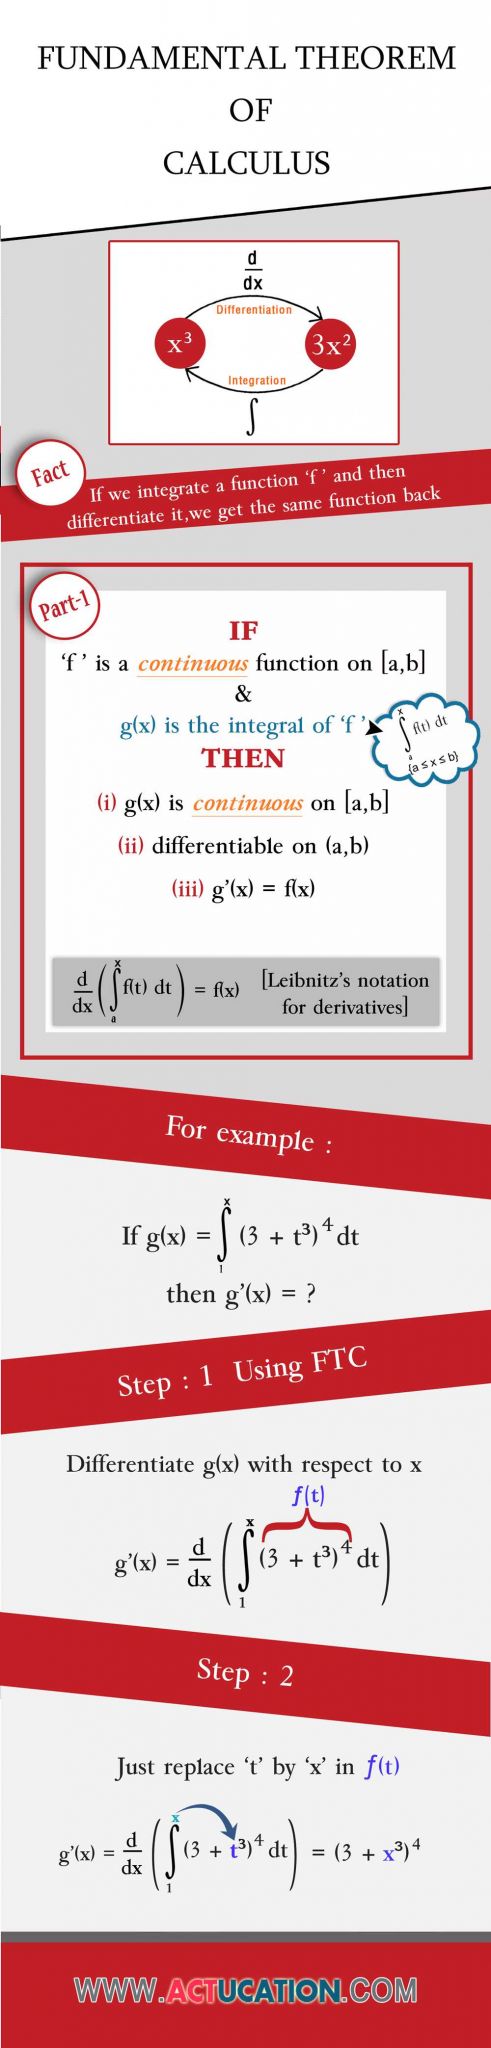 Computing formula Mass Worksheet together with Fundamental theorem Of Calculus Infographic Pinterest